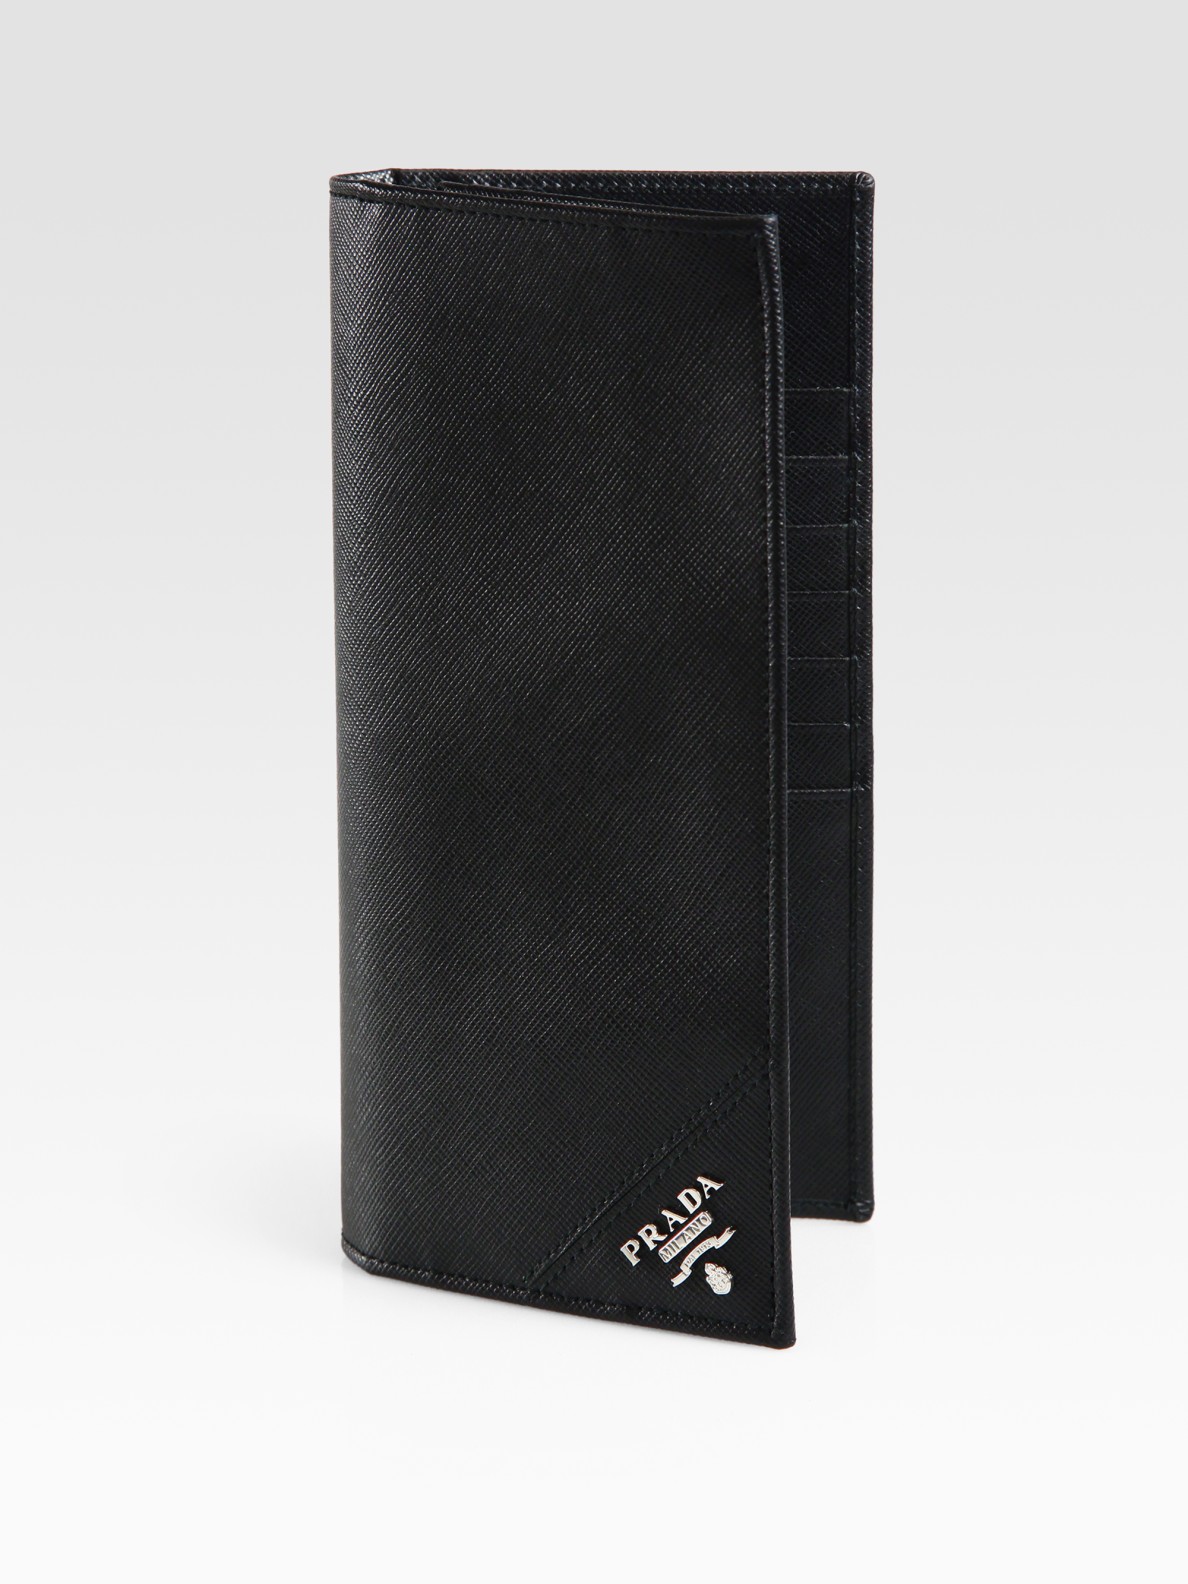 Lyst - Prada Leather Travel Wallet in Black for Men